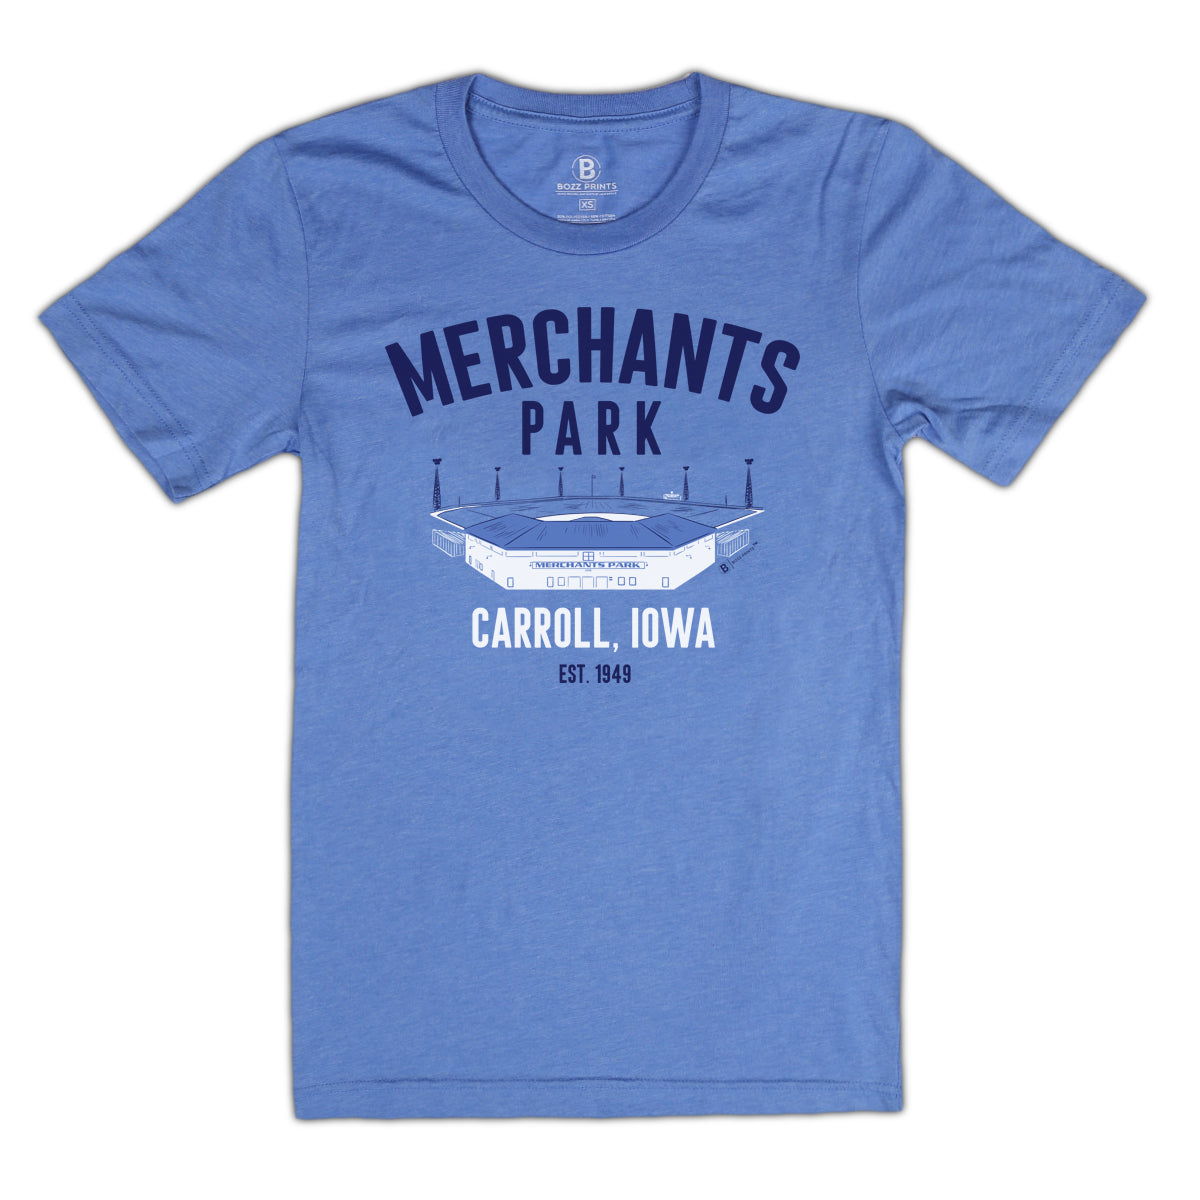 Merchants Park T-Shirt - Bozz Prints